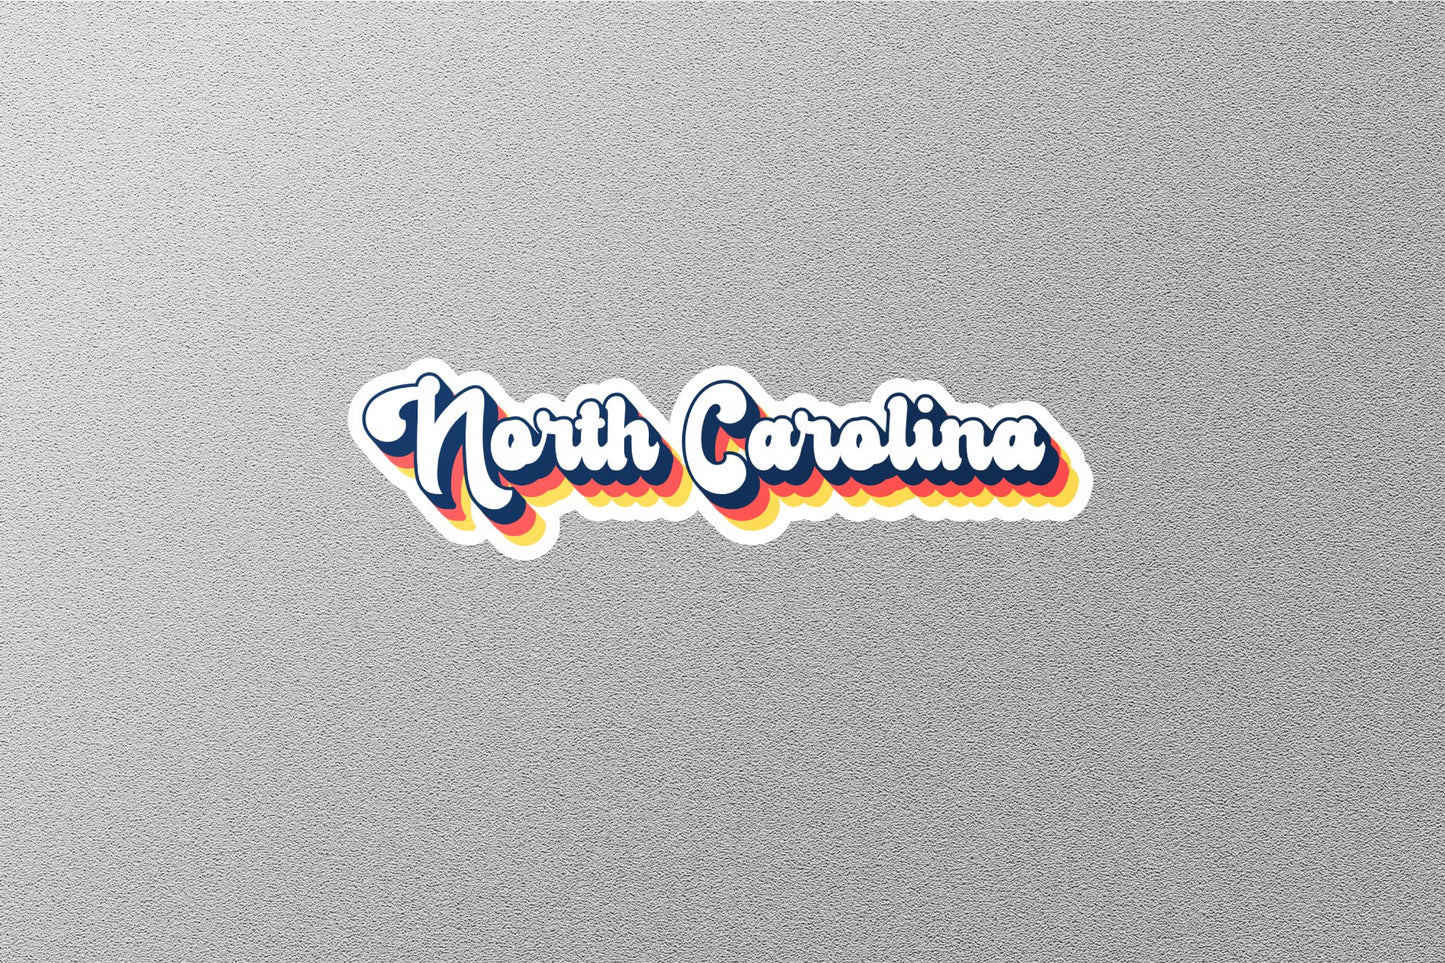 Retro North Carolina State Sticker